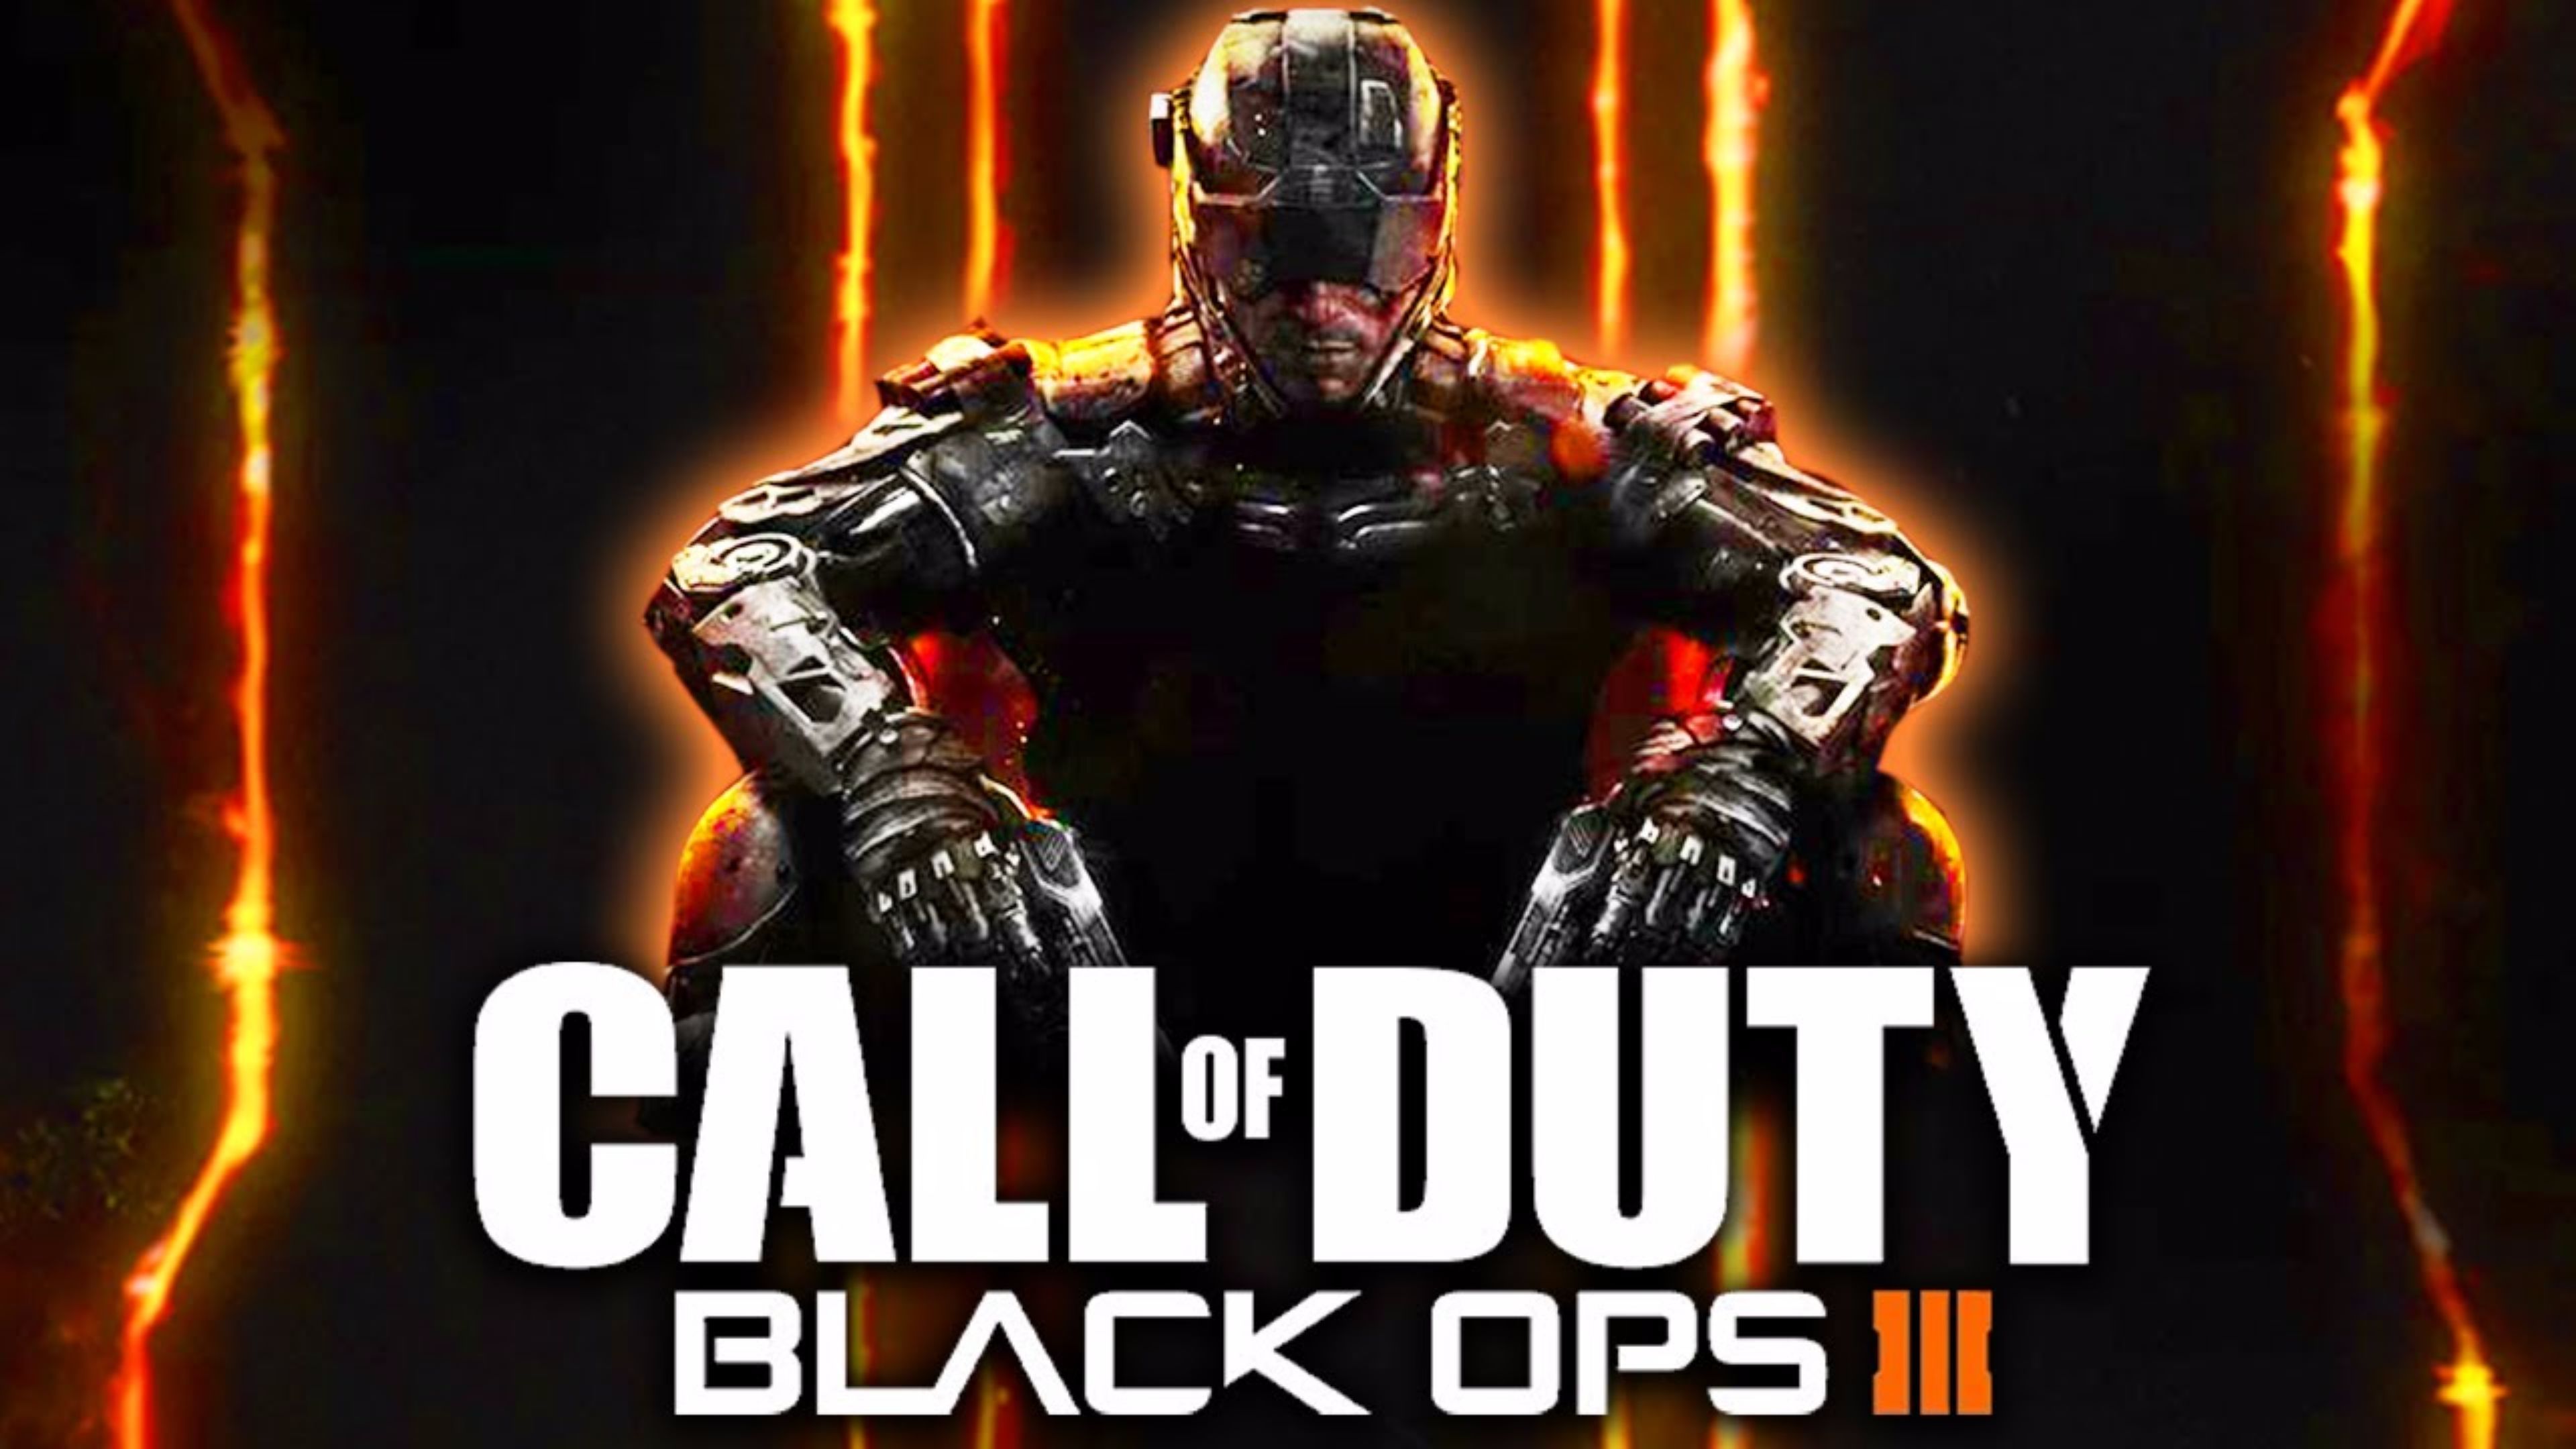 Download Free Call of Duty Black Ops 3 4K Wallpaper | Free 4K ...